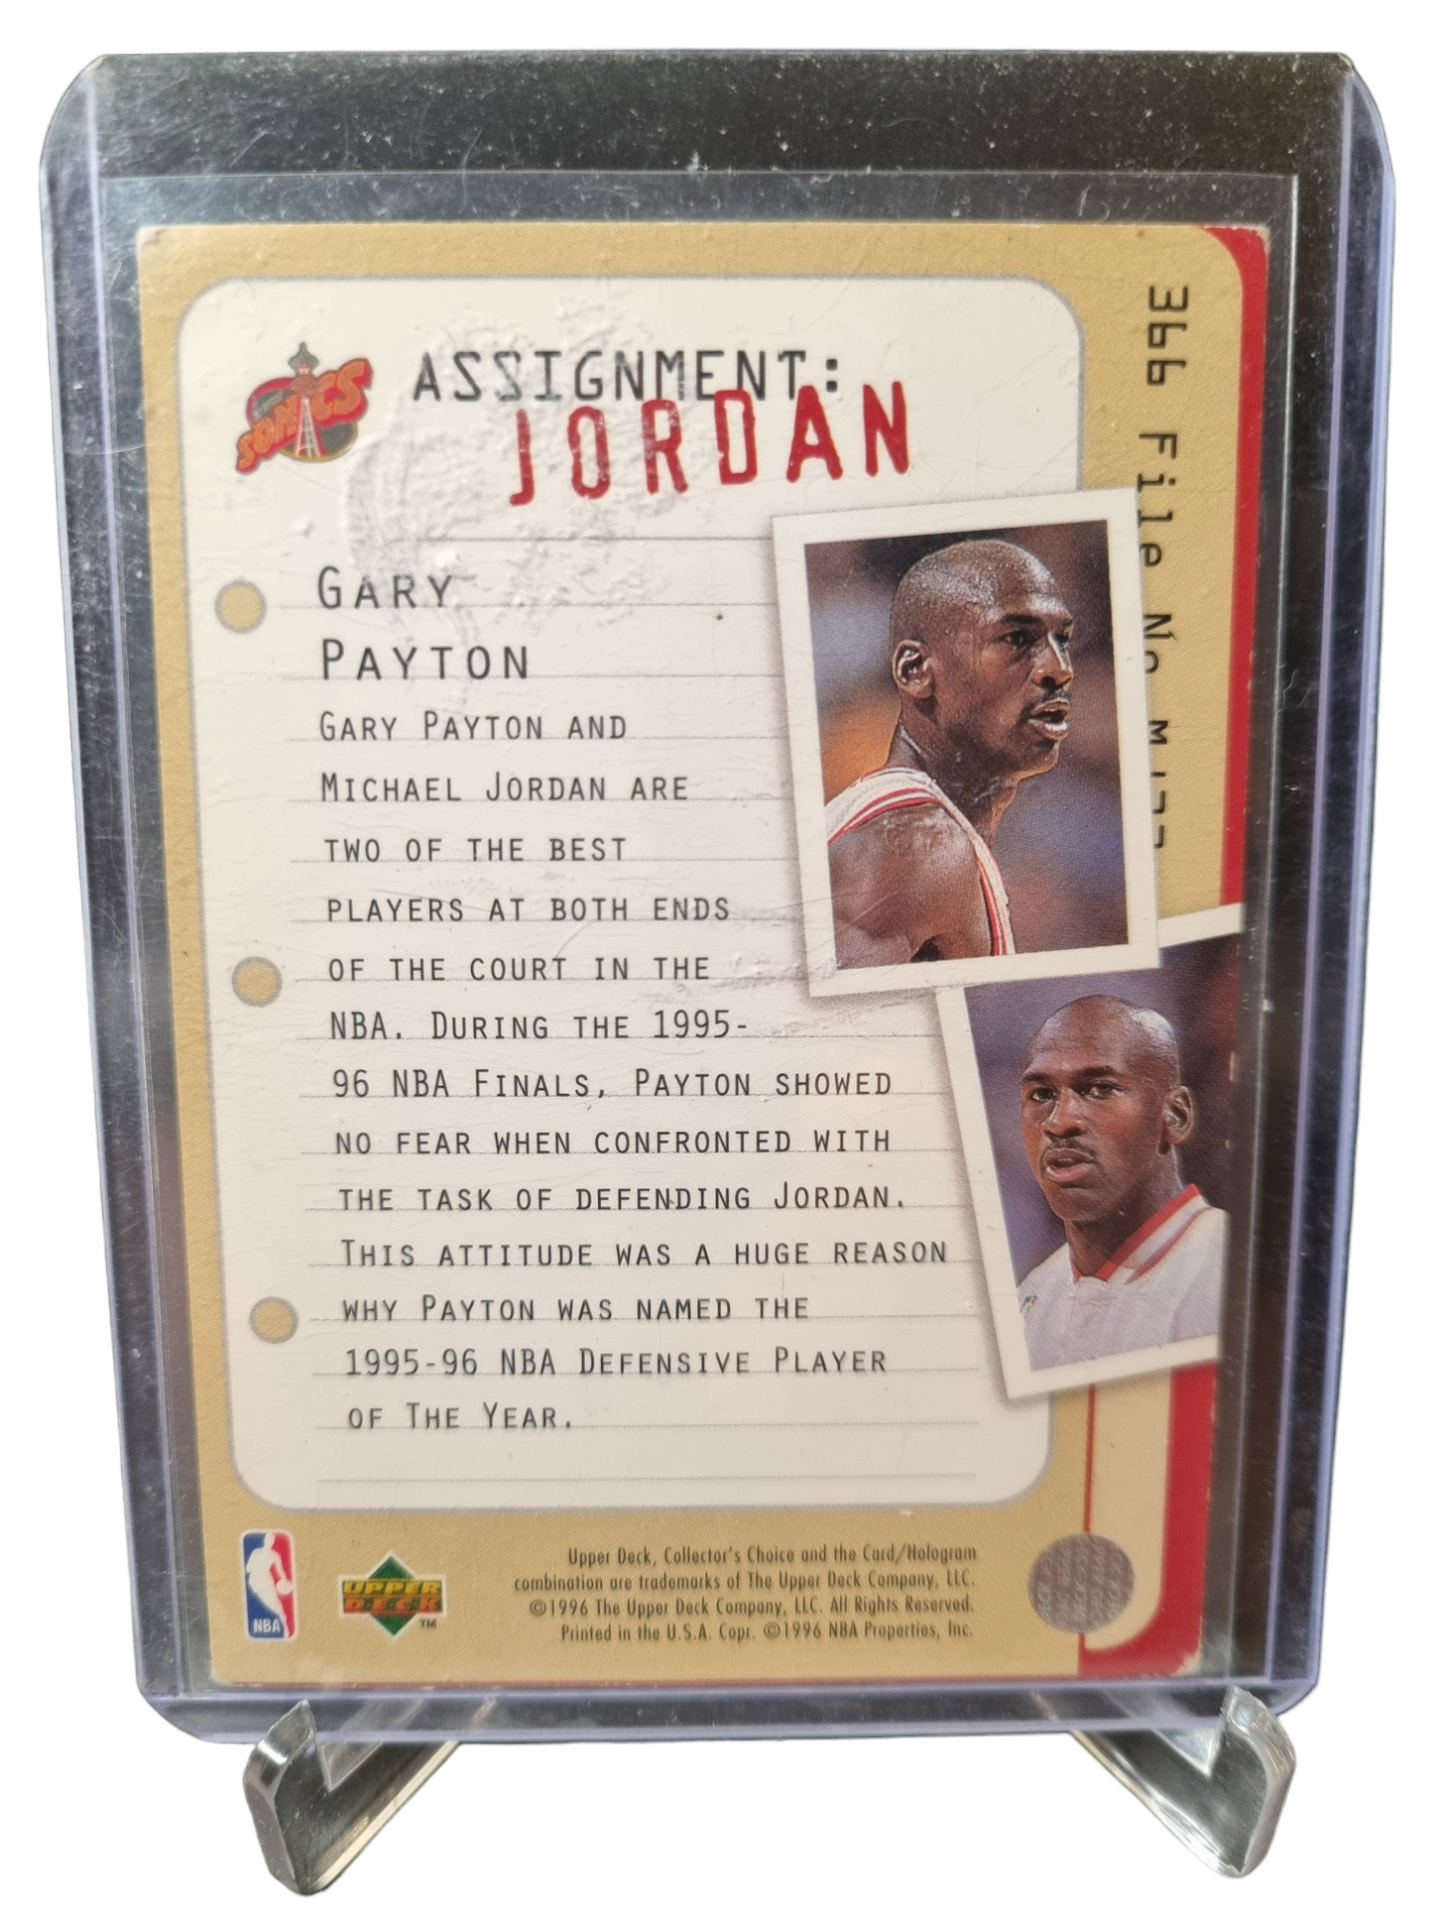 1996 Upper Deck #366 Michael Jordan Assignment Jordan